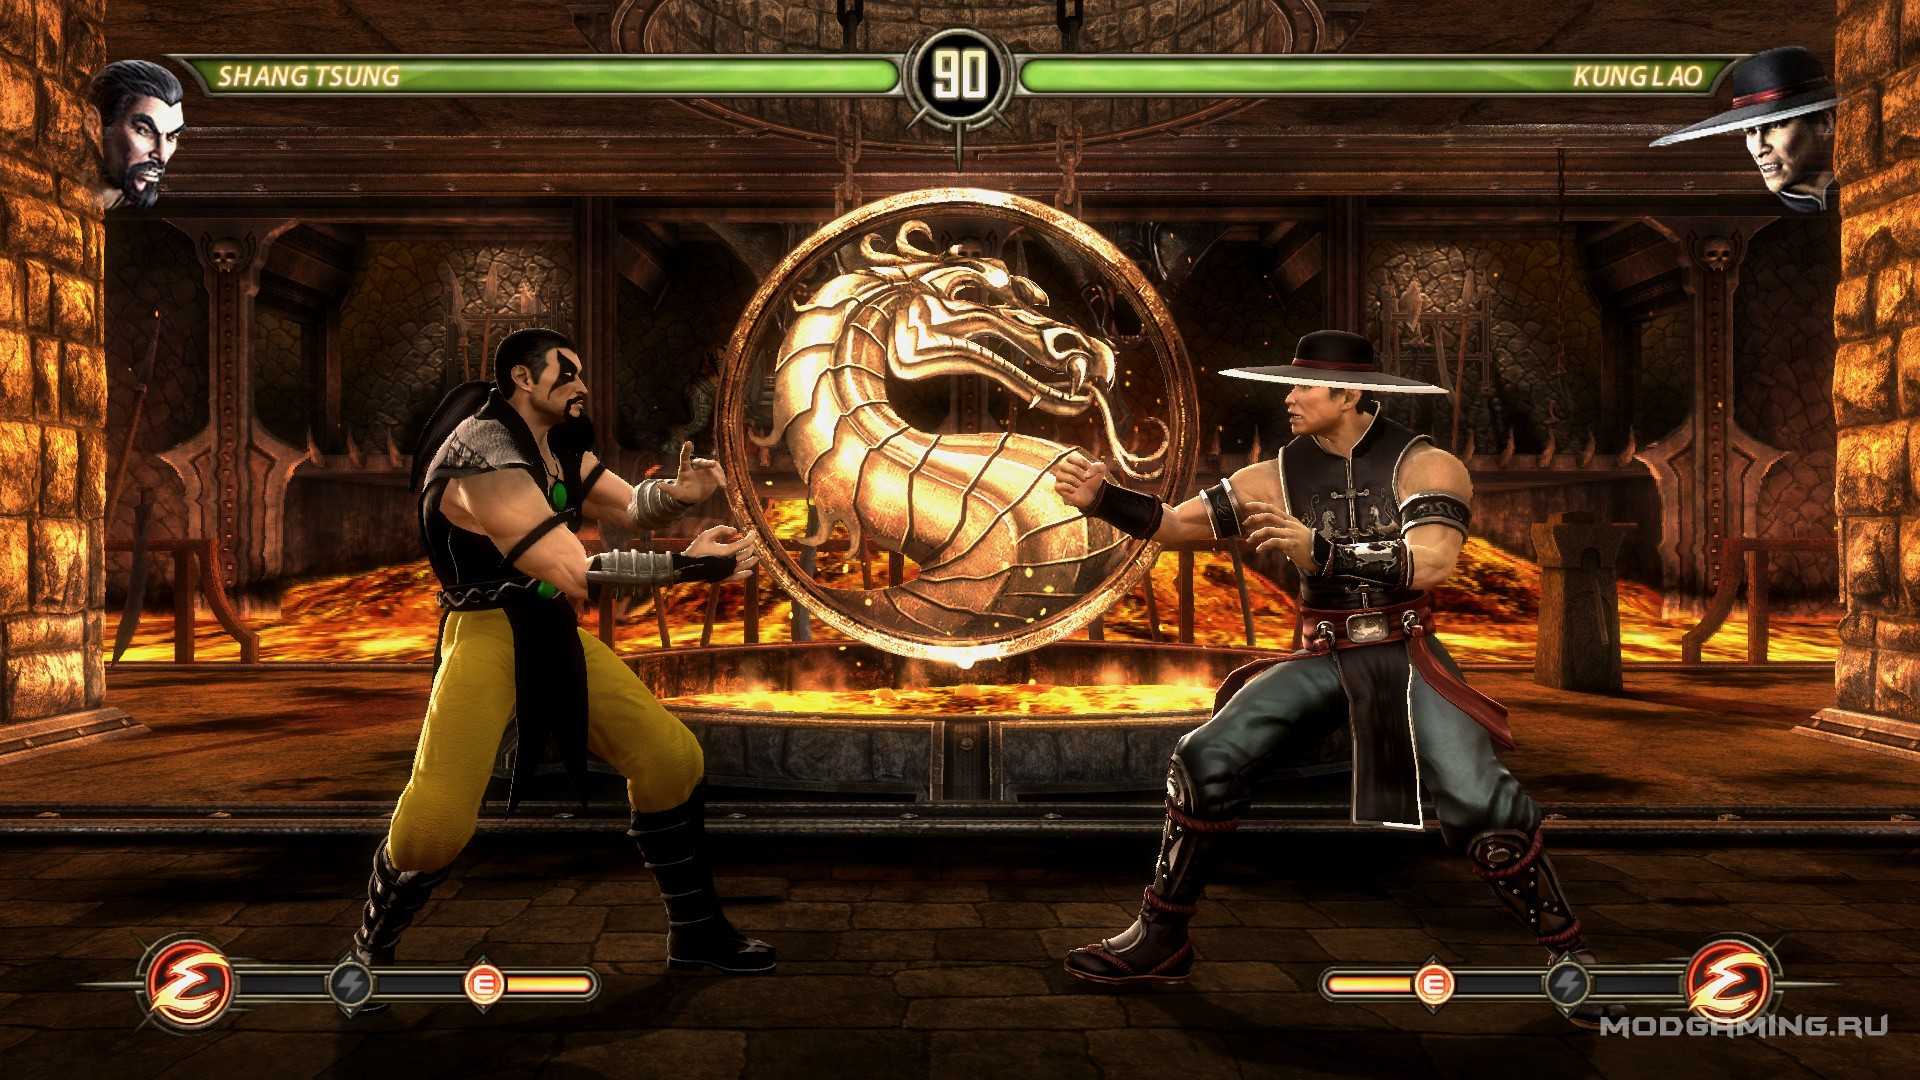 Музыка из игры комбат. Шанг Цунг мортал комбат 3. Игра мортал комбат игра мортал комбат. Mortal Mortal Kombat 3 Shang Tsung. Mortal Kombat 2002.